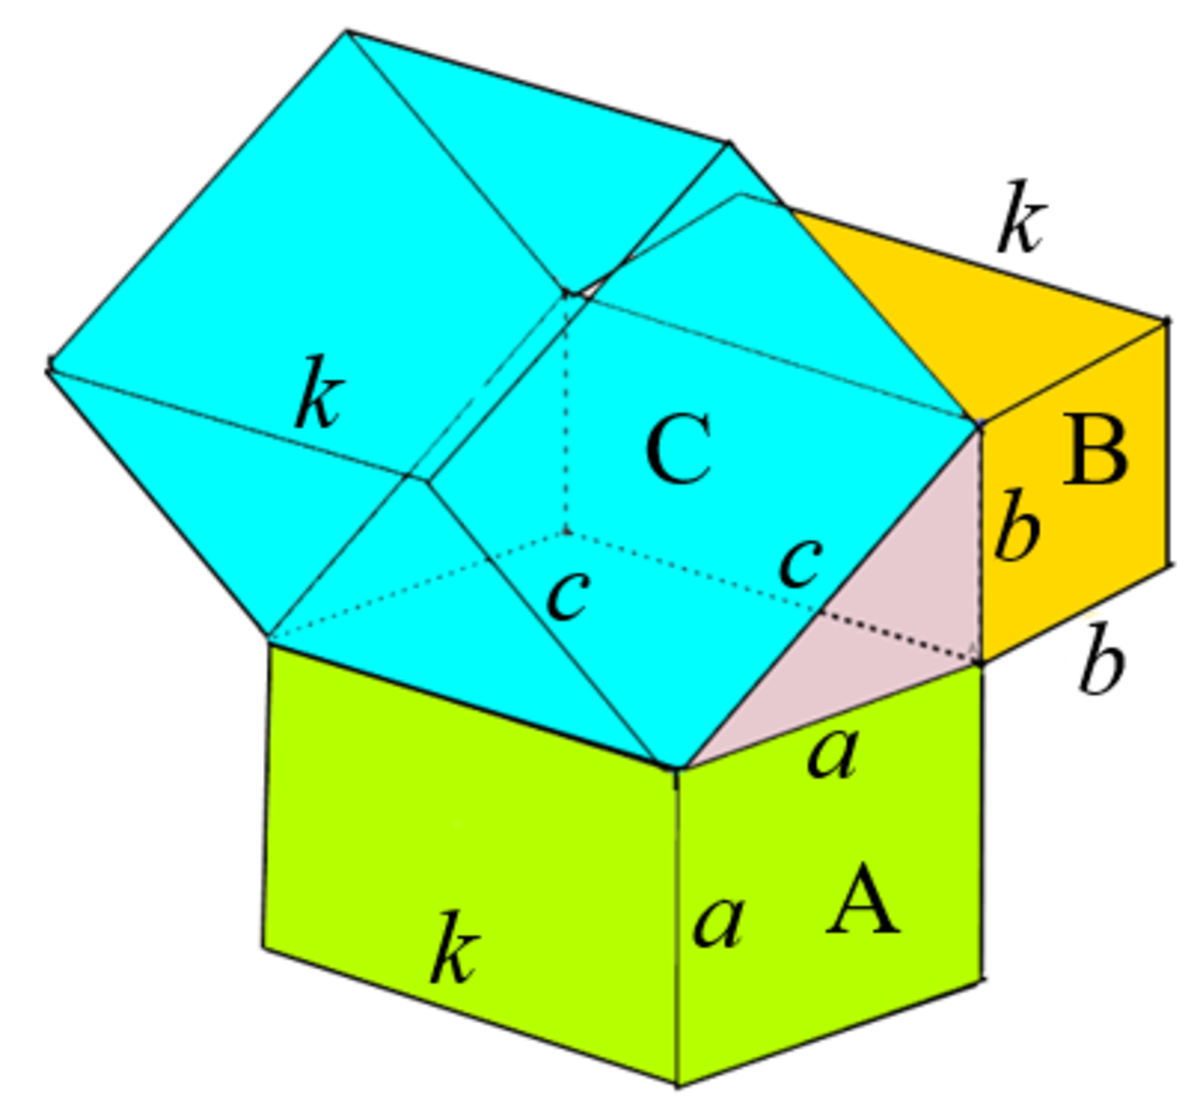 pythagoras-theorem-using-polygons-circles-and-solids